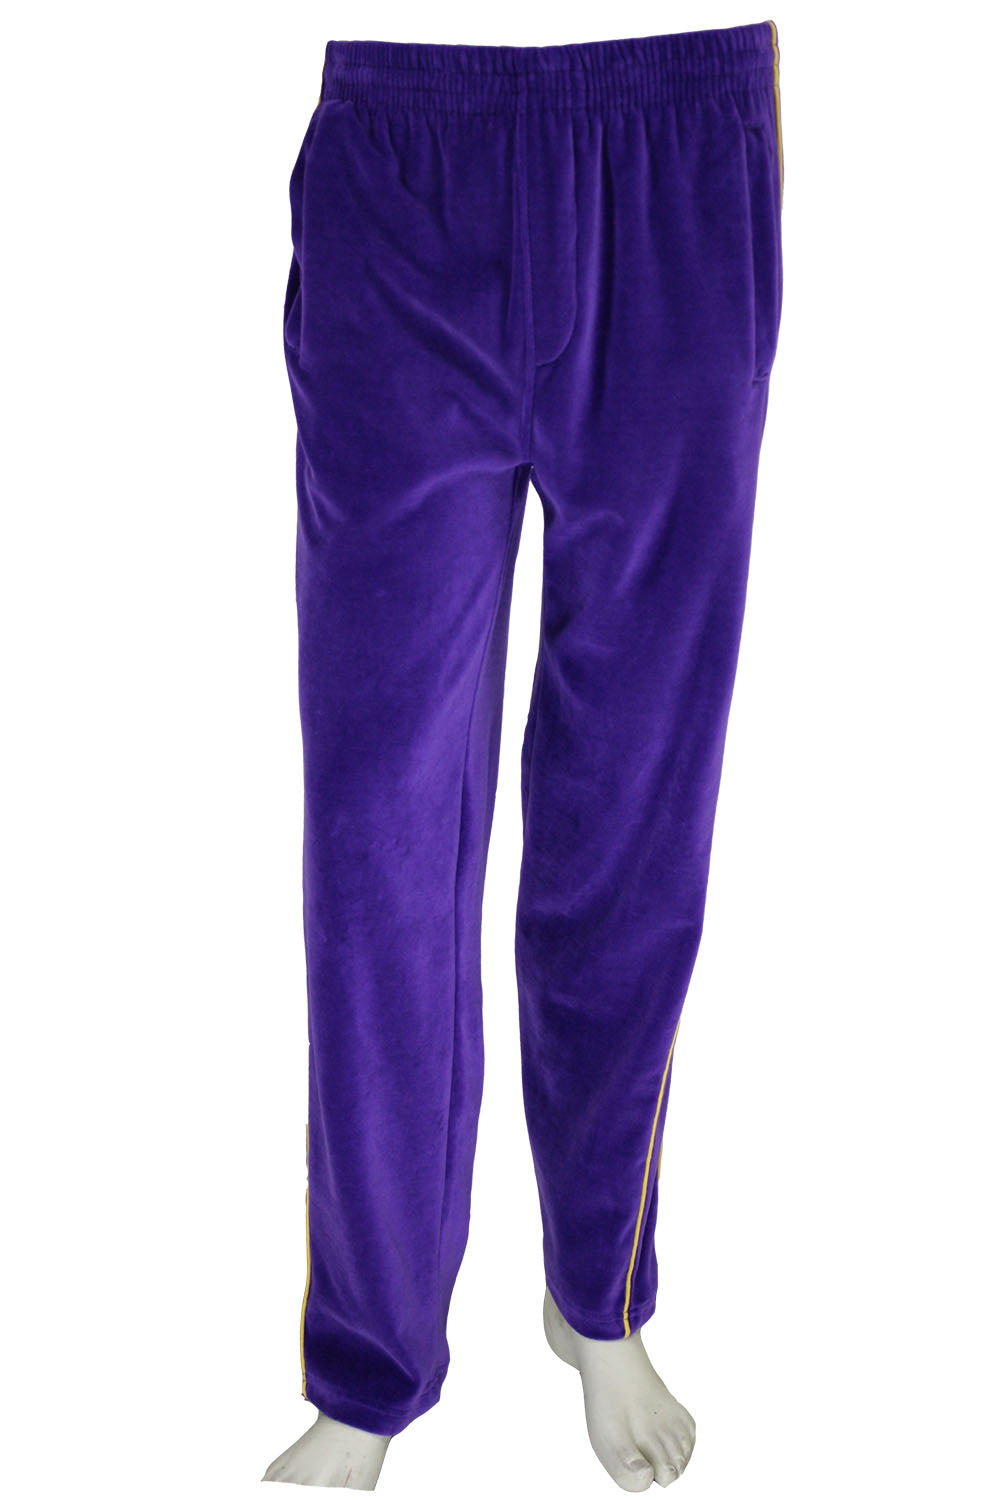 purple track pants men